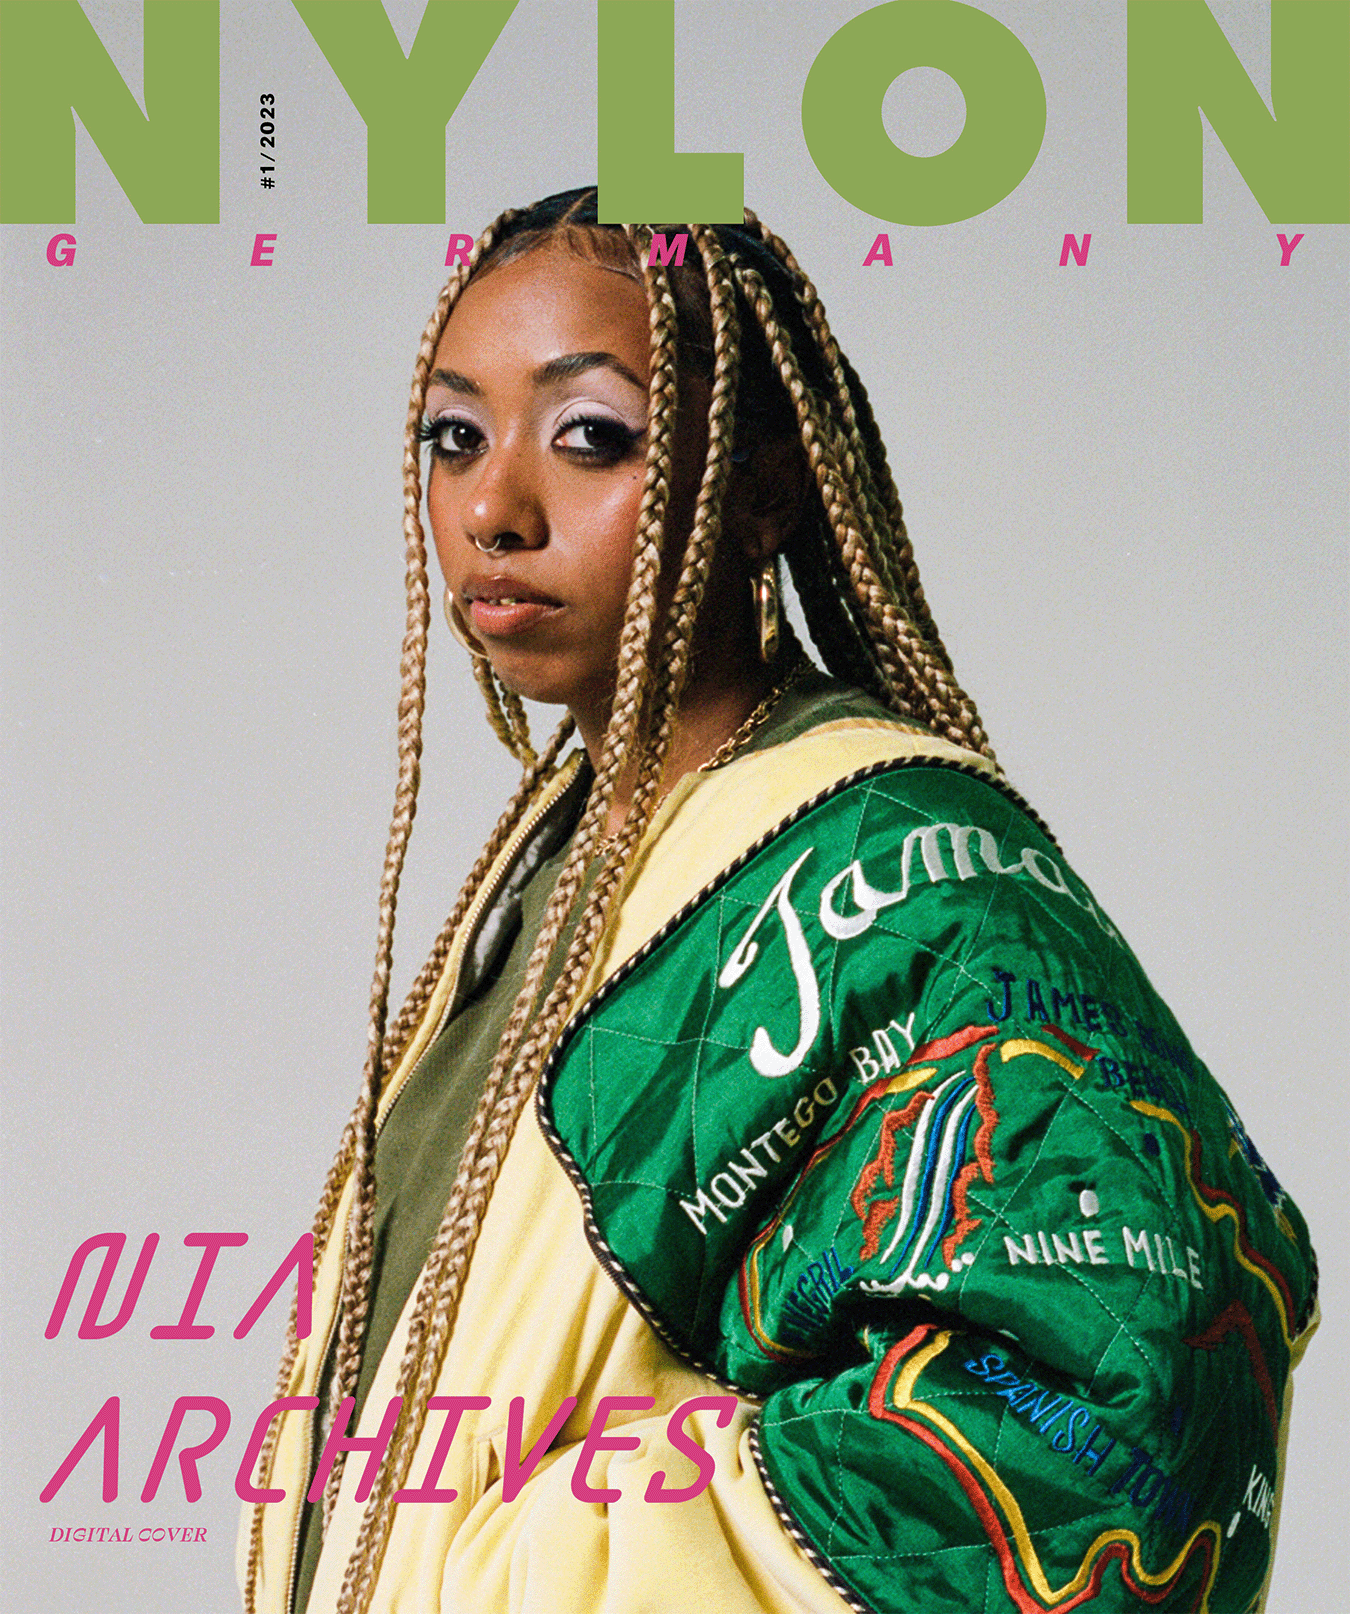 Nia Archives auf dem digitalen Cover der NYLON